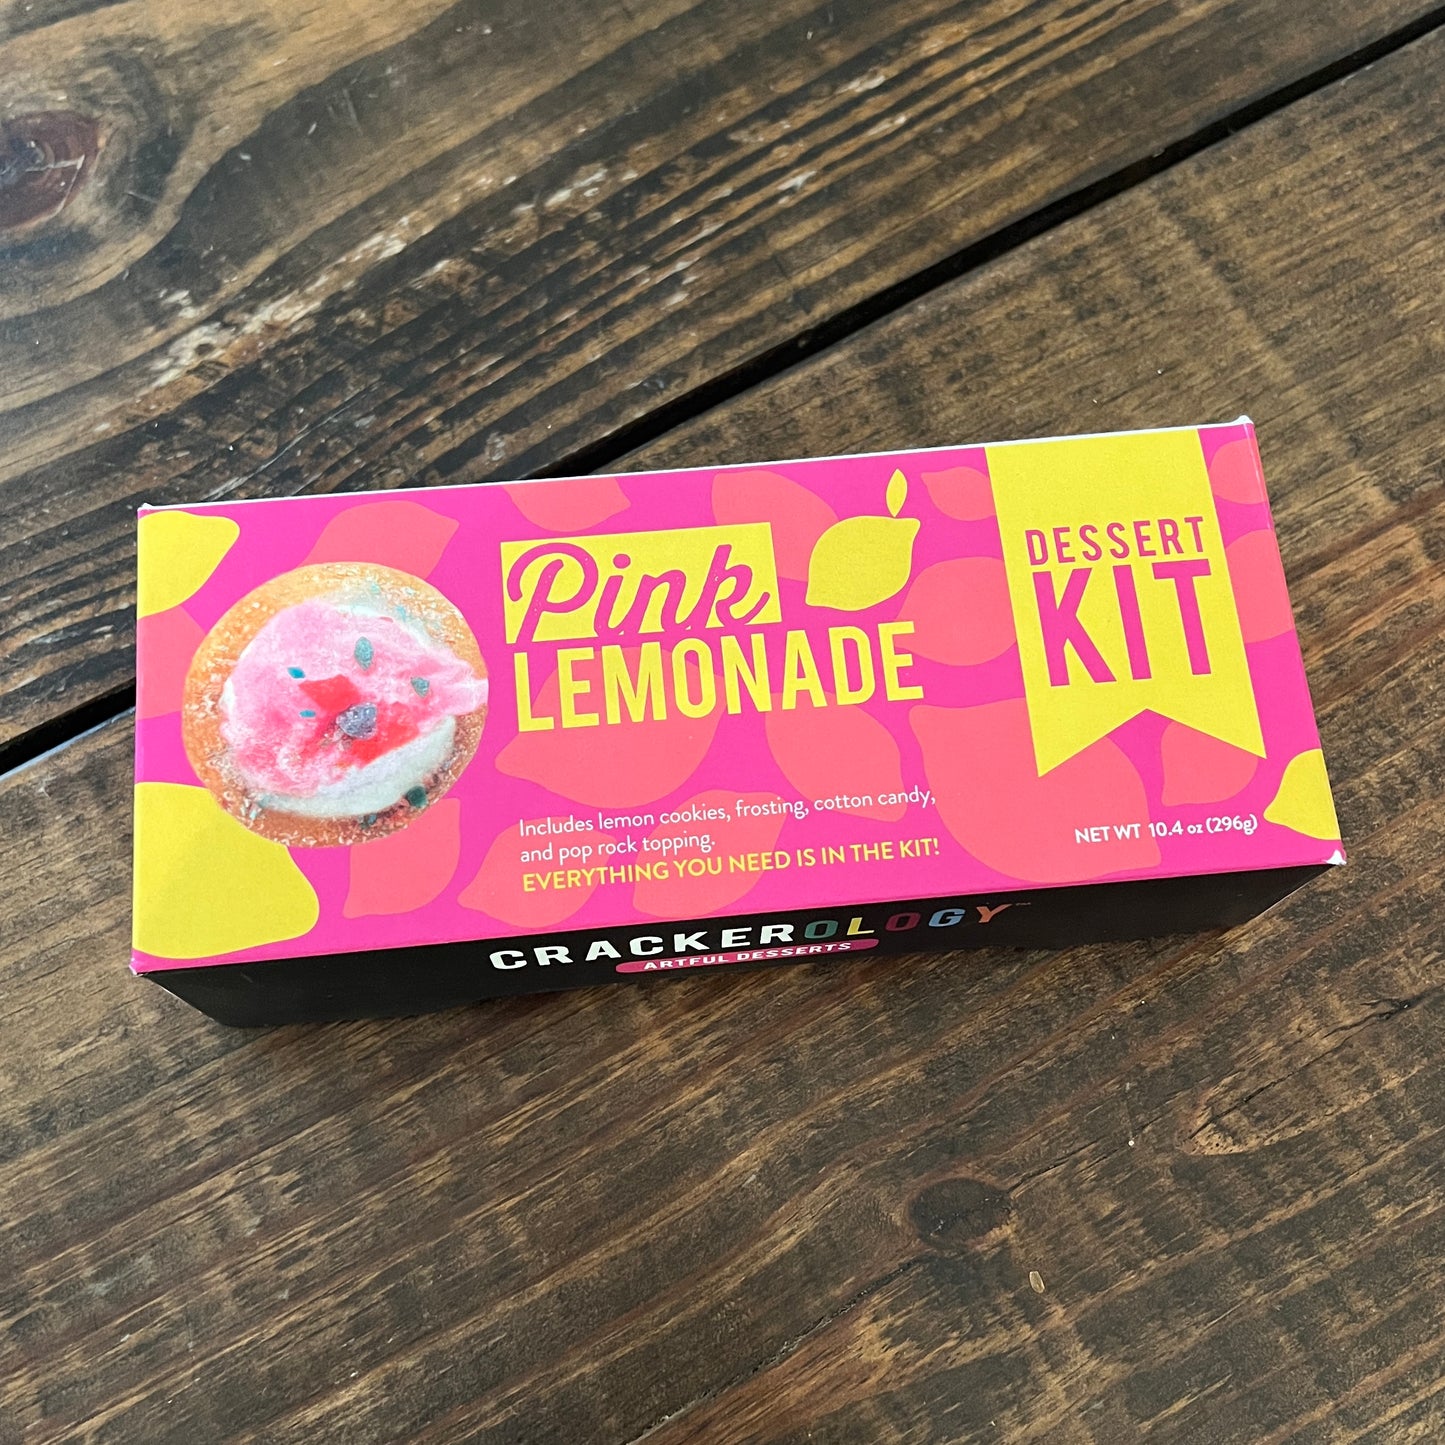 Crackerology Pink Lemonade Dessert Kit